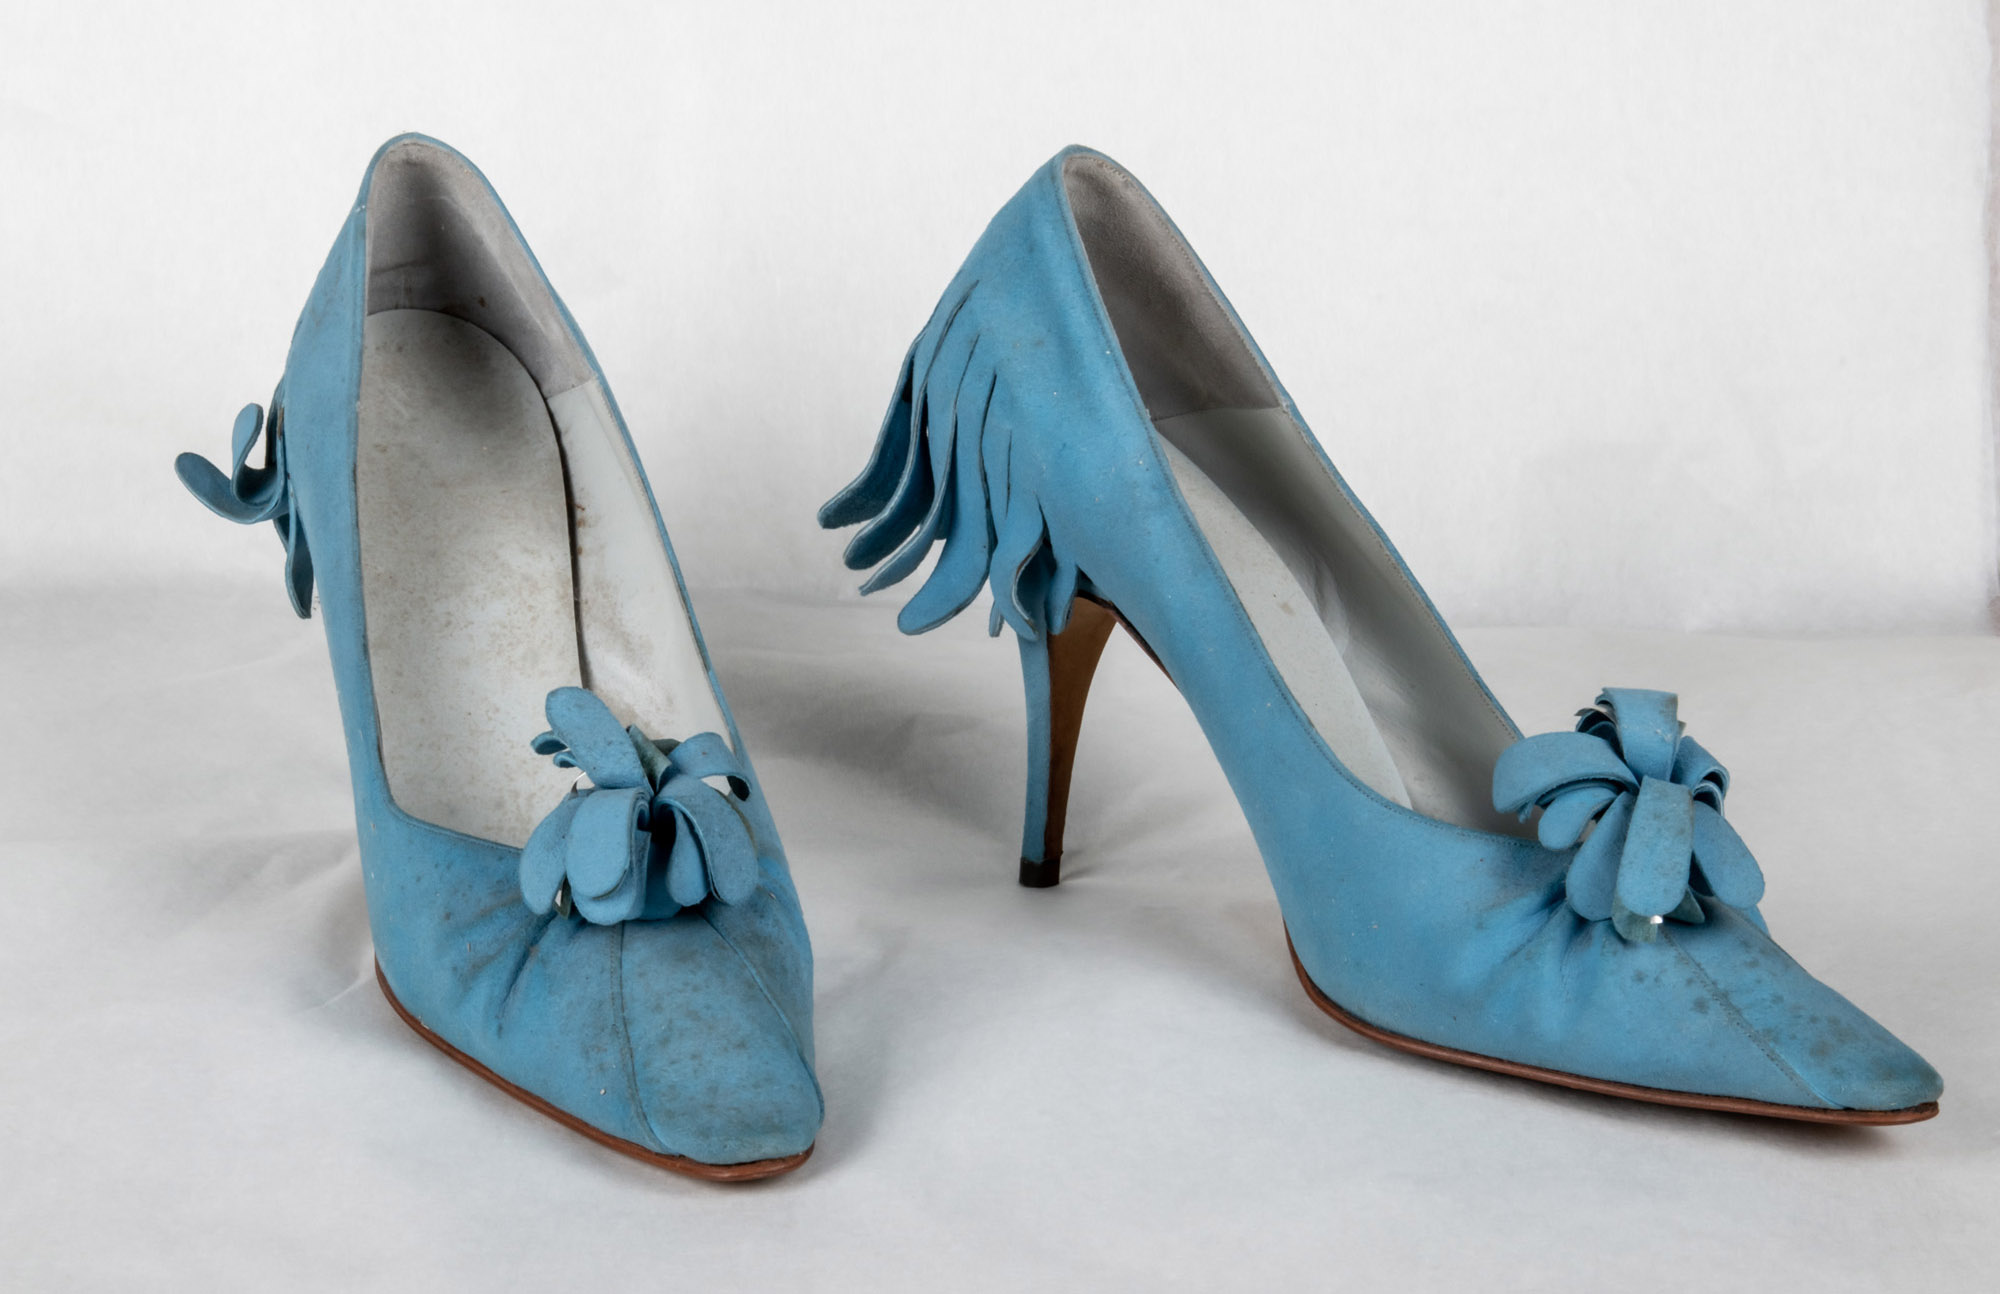 Robert King's The Blue Shoe